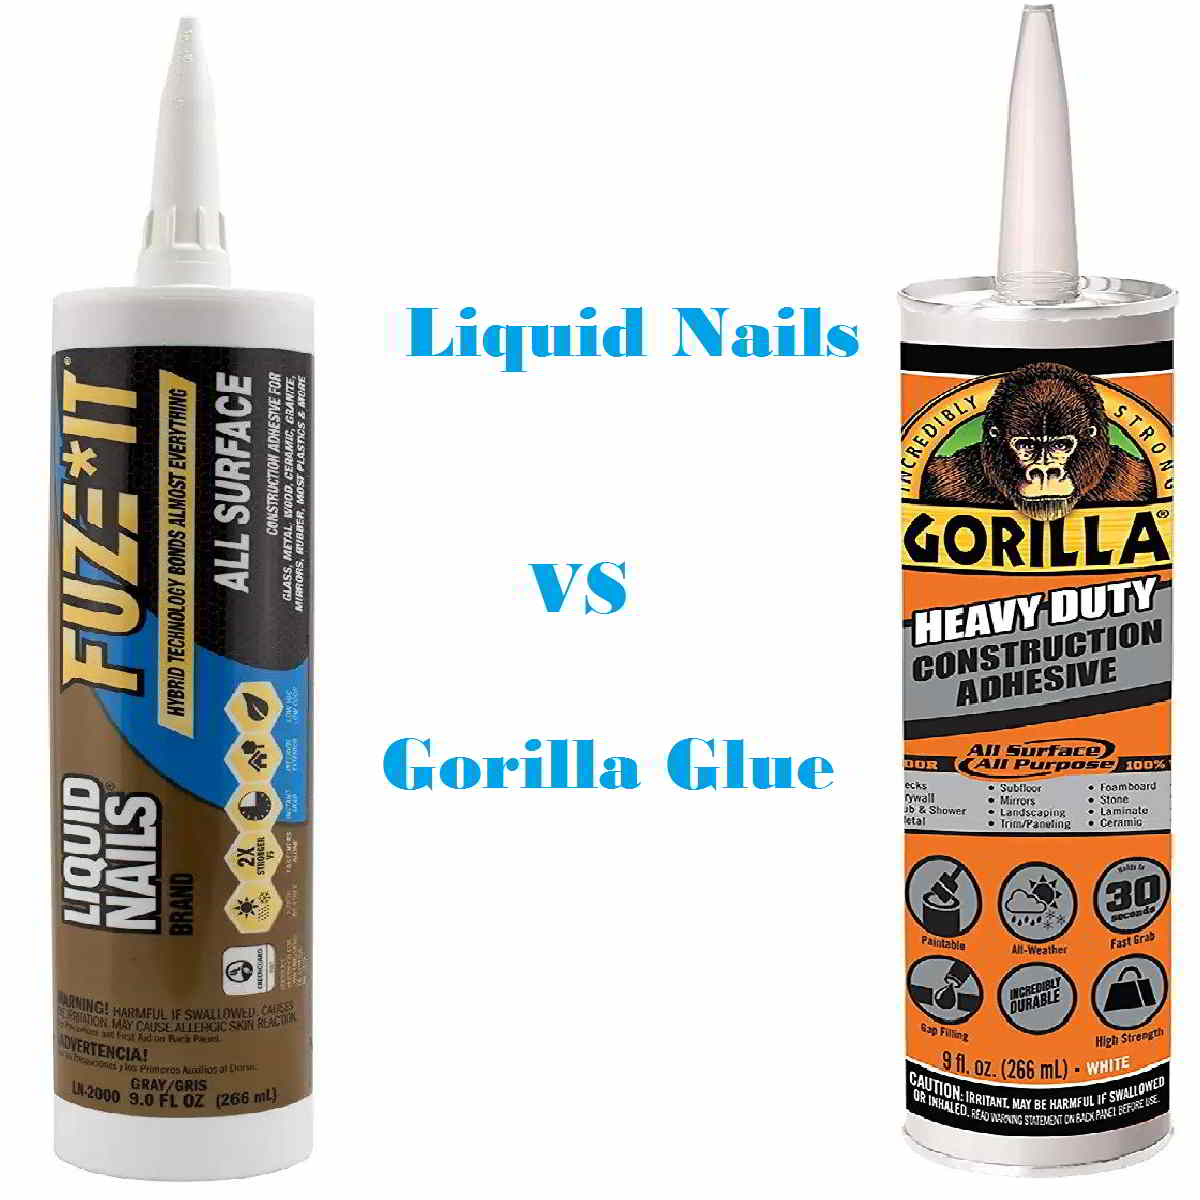 Liquid nails vs Gorilla glue